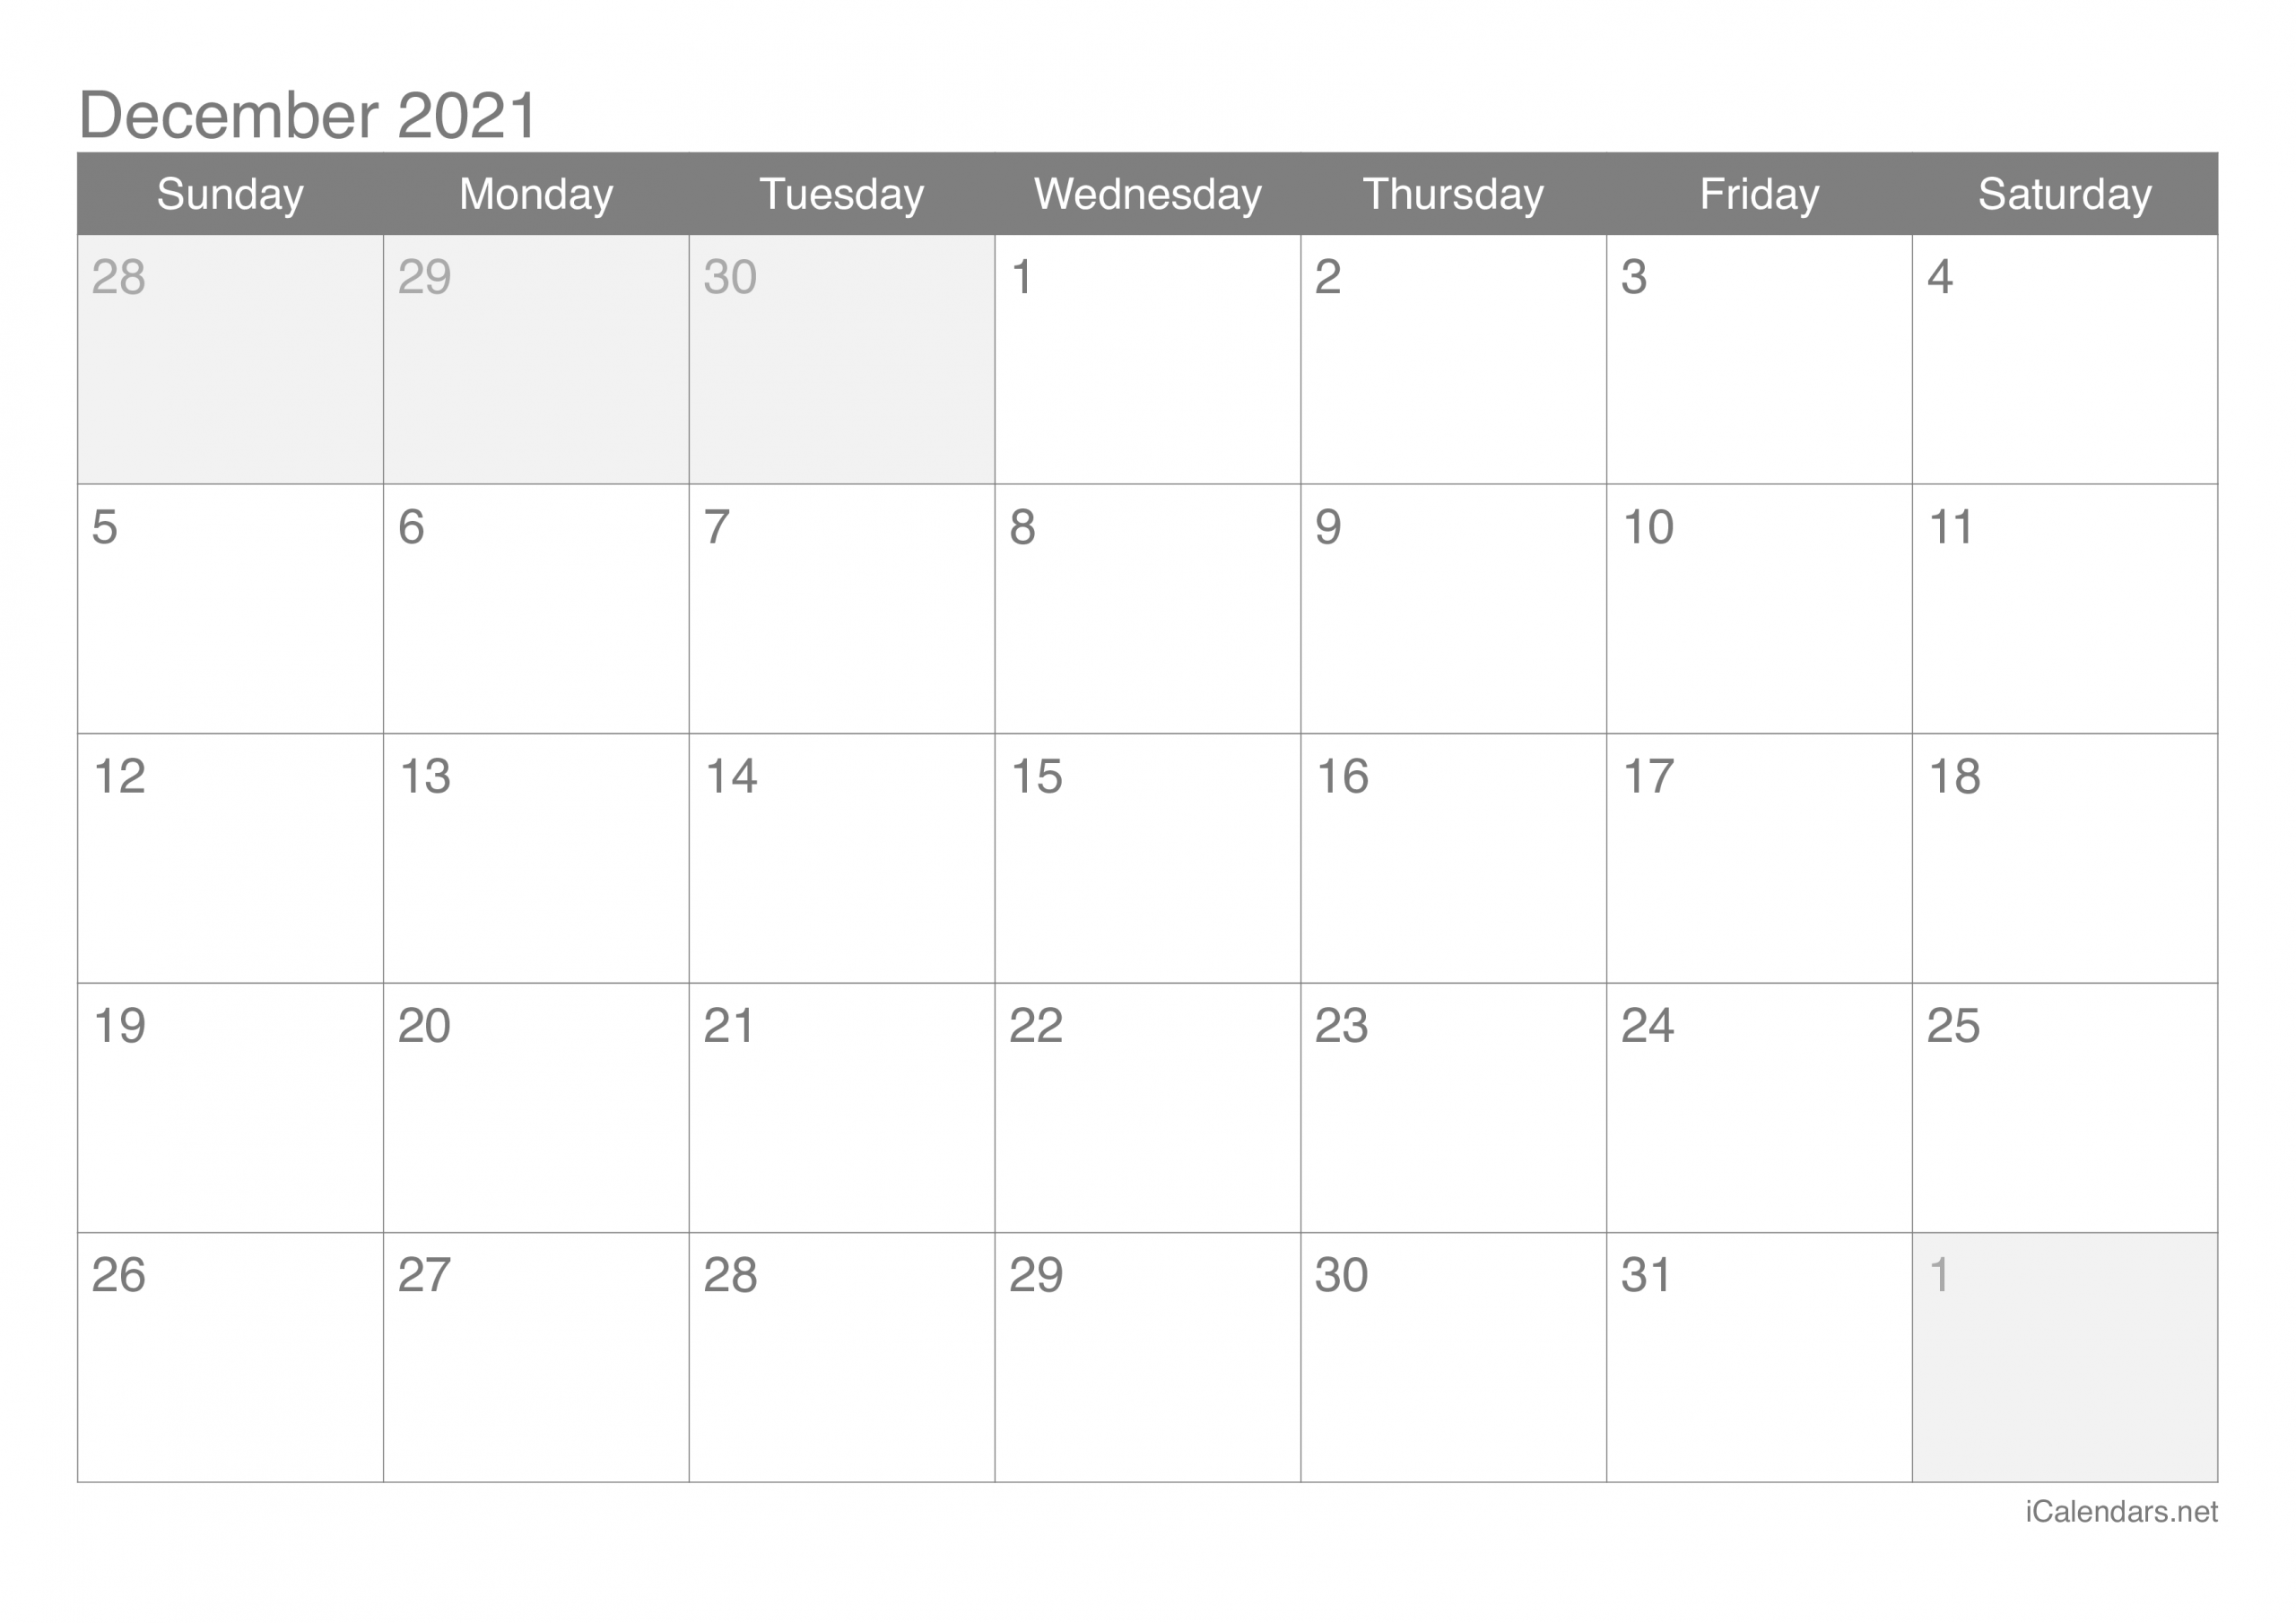 December 2021 Printable Calendar - Icalendars December 2021 Monthly Calendar